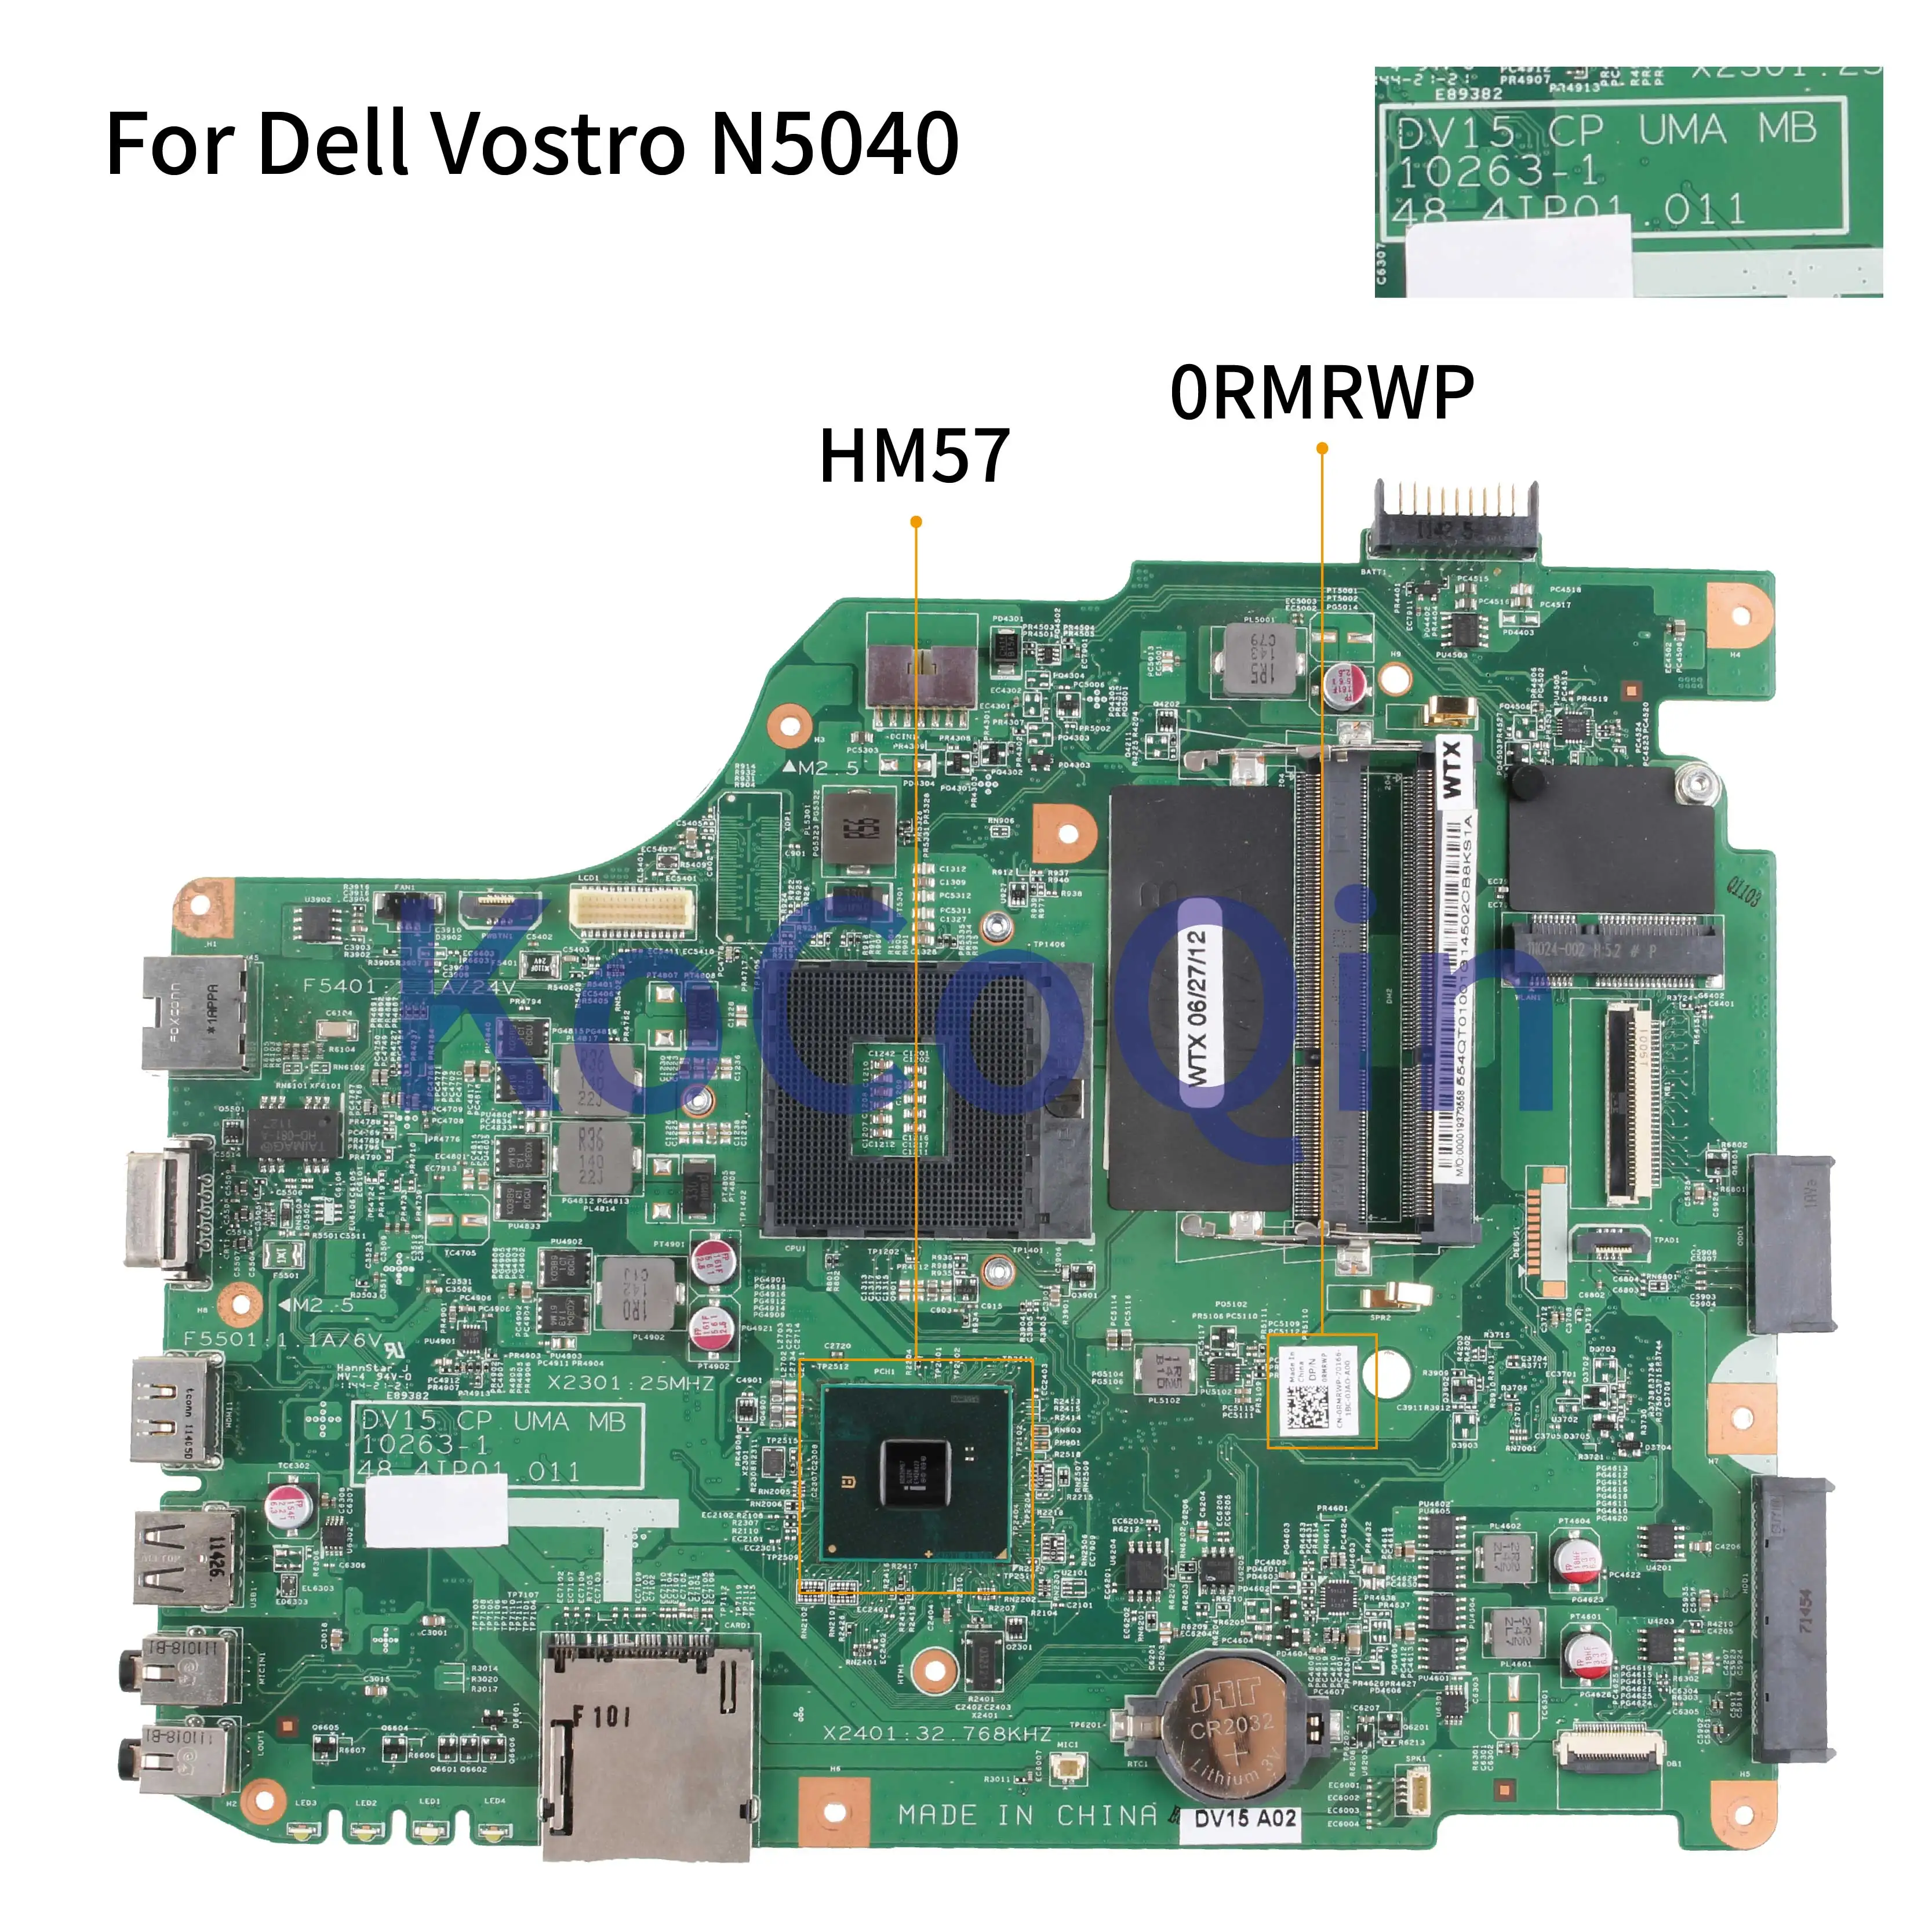 Kocoqin материнская плата для ноутбука Dell Vostro 1540 V1540 15R N5040 HM57 материнская плата 0 rmrwp CN-0RMRWP 10263-1 48.4IP01.011